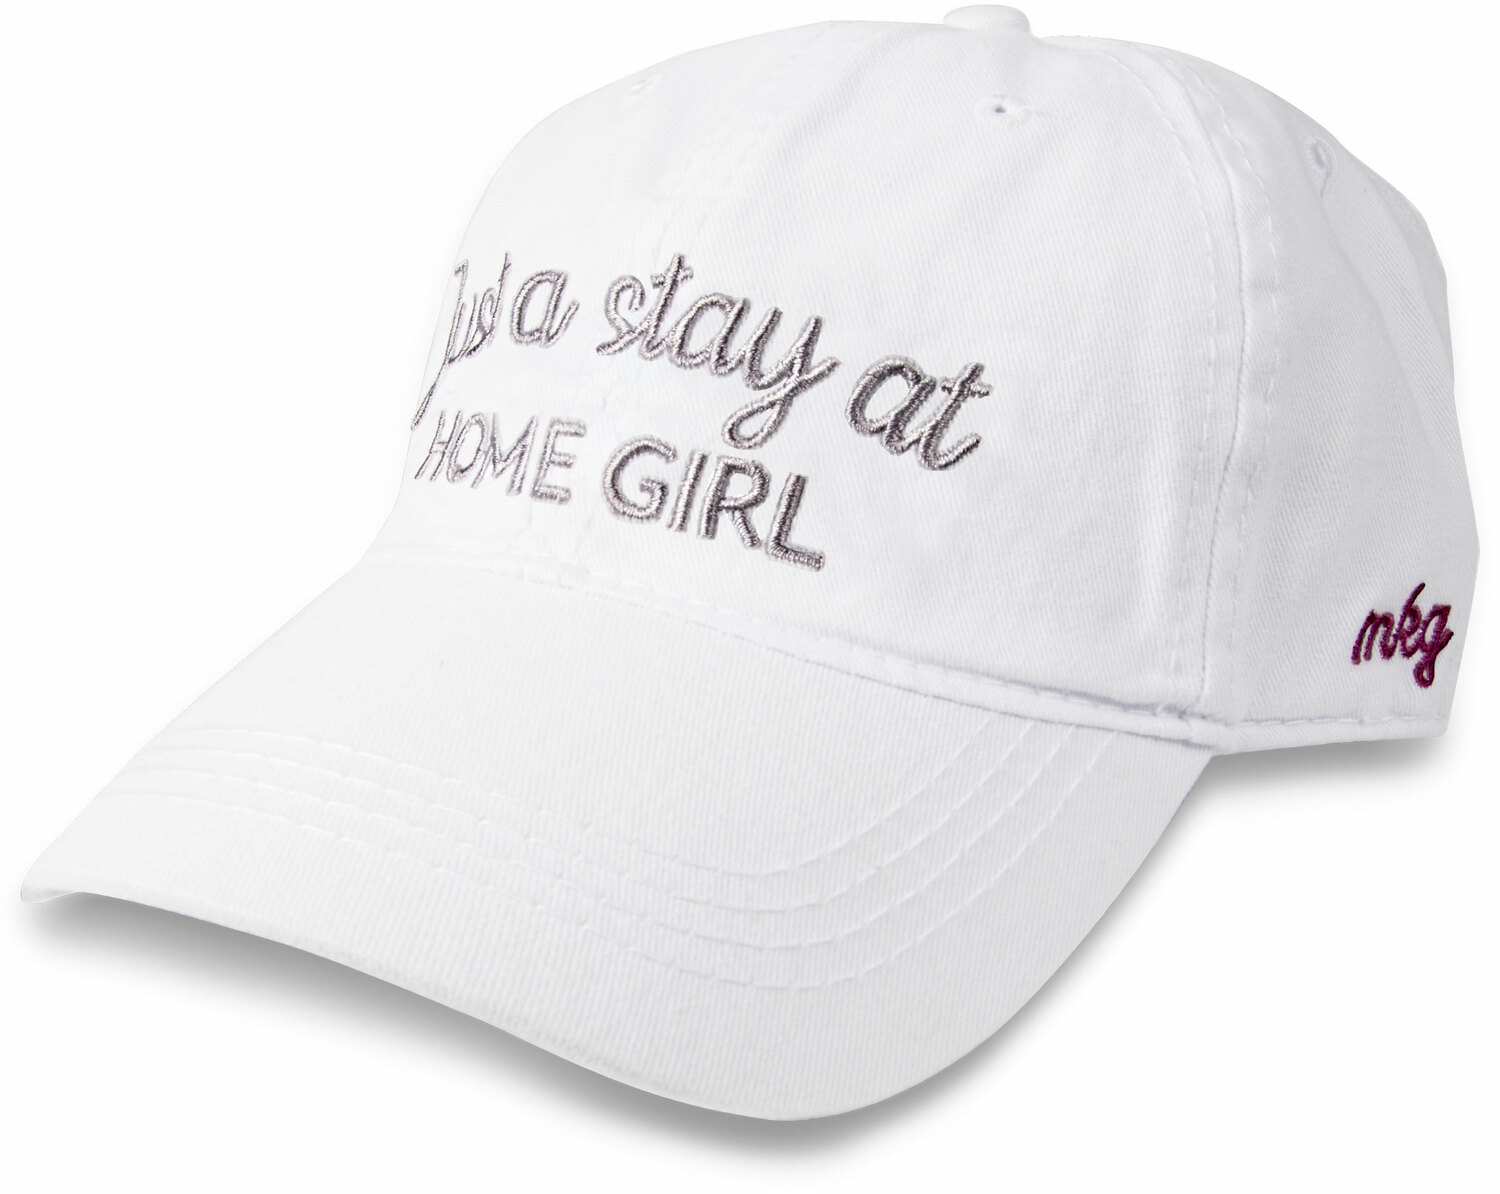 Home Girl by My Kinda Girl - Home Girl - White Adjustable Hat